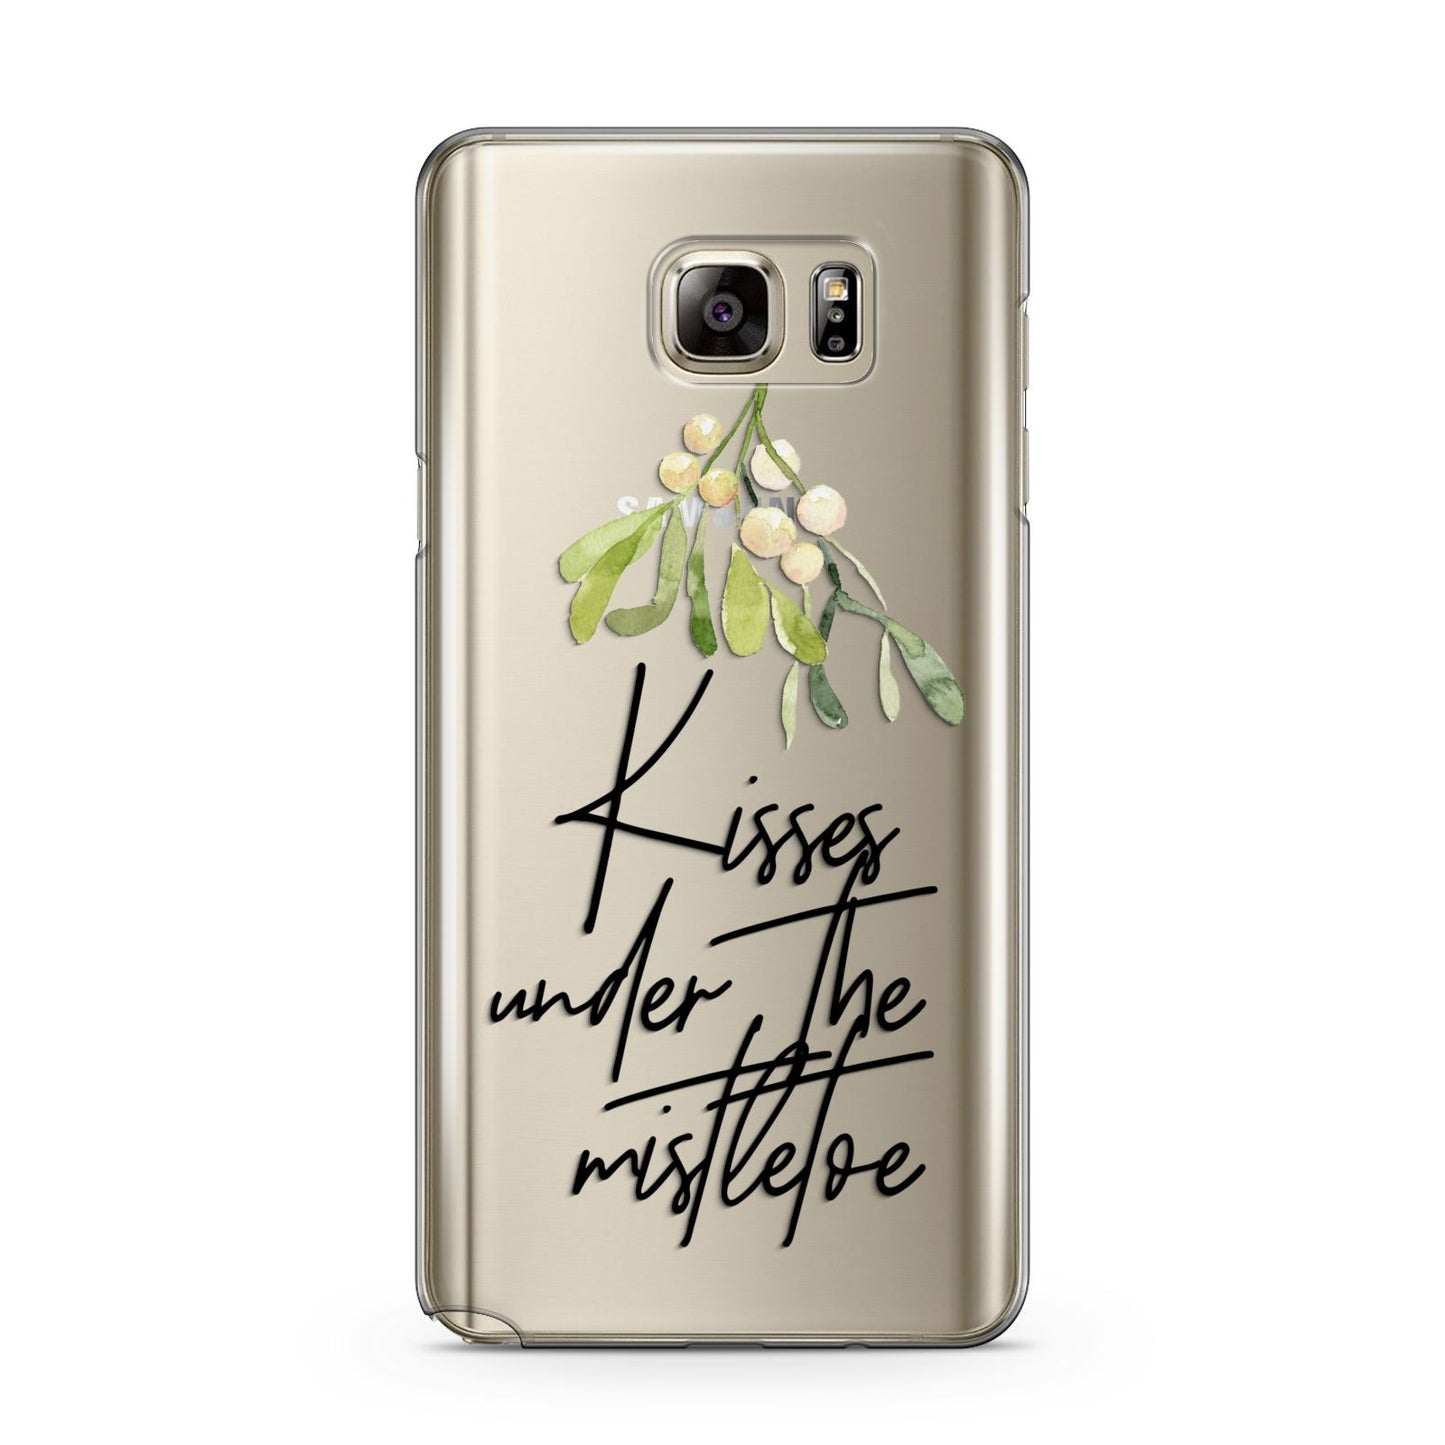 Kisses Under The Mistletoe Samsung Galaxy Note 5 Case